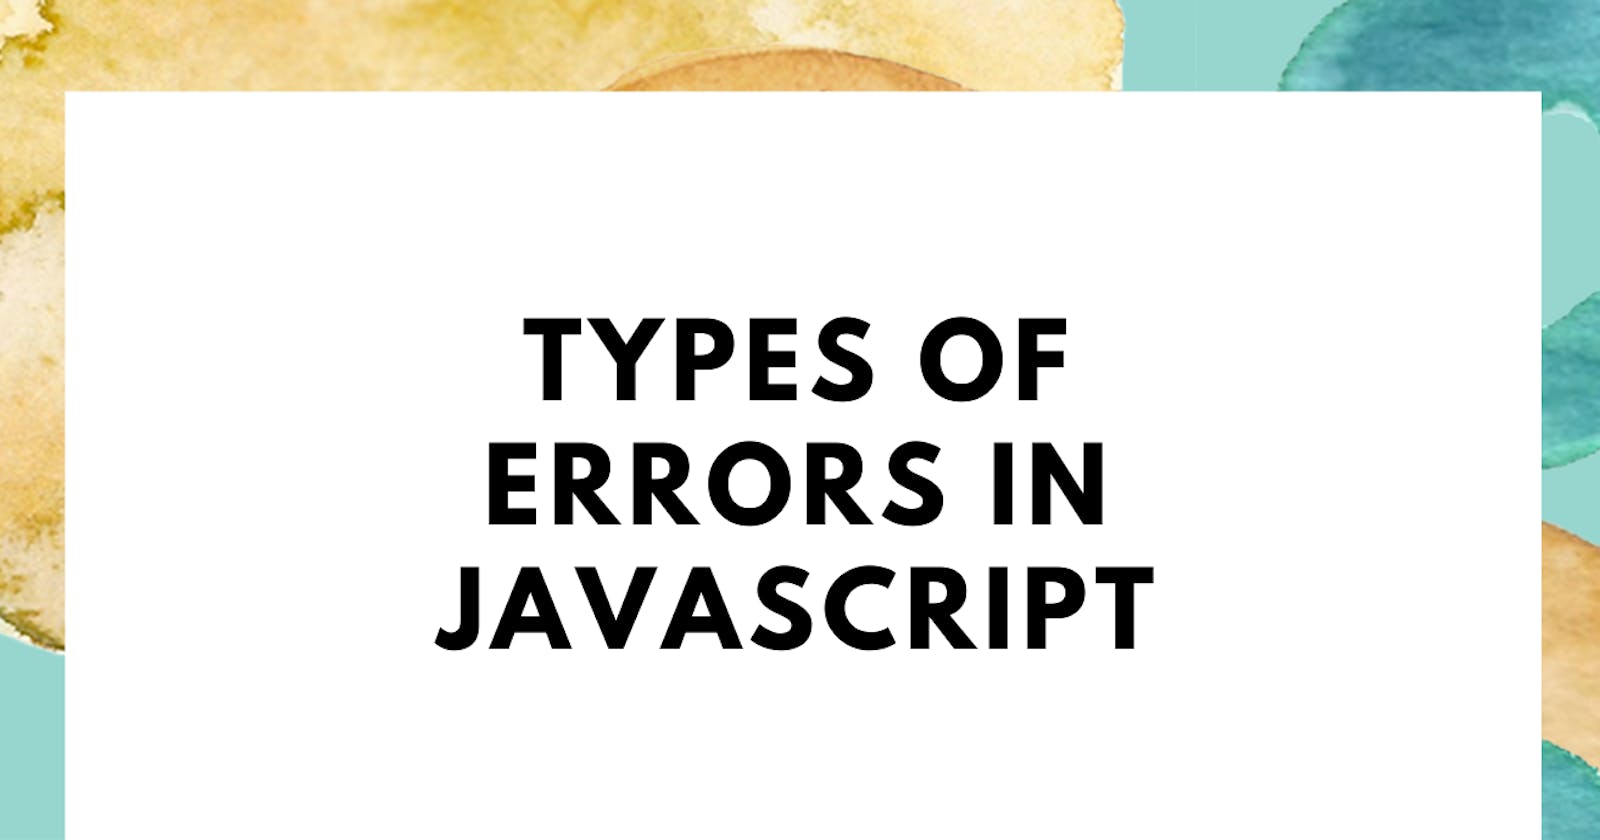 Types of errors in javascript.